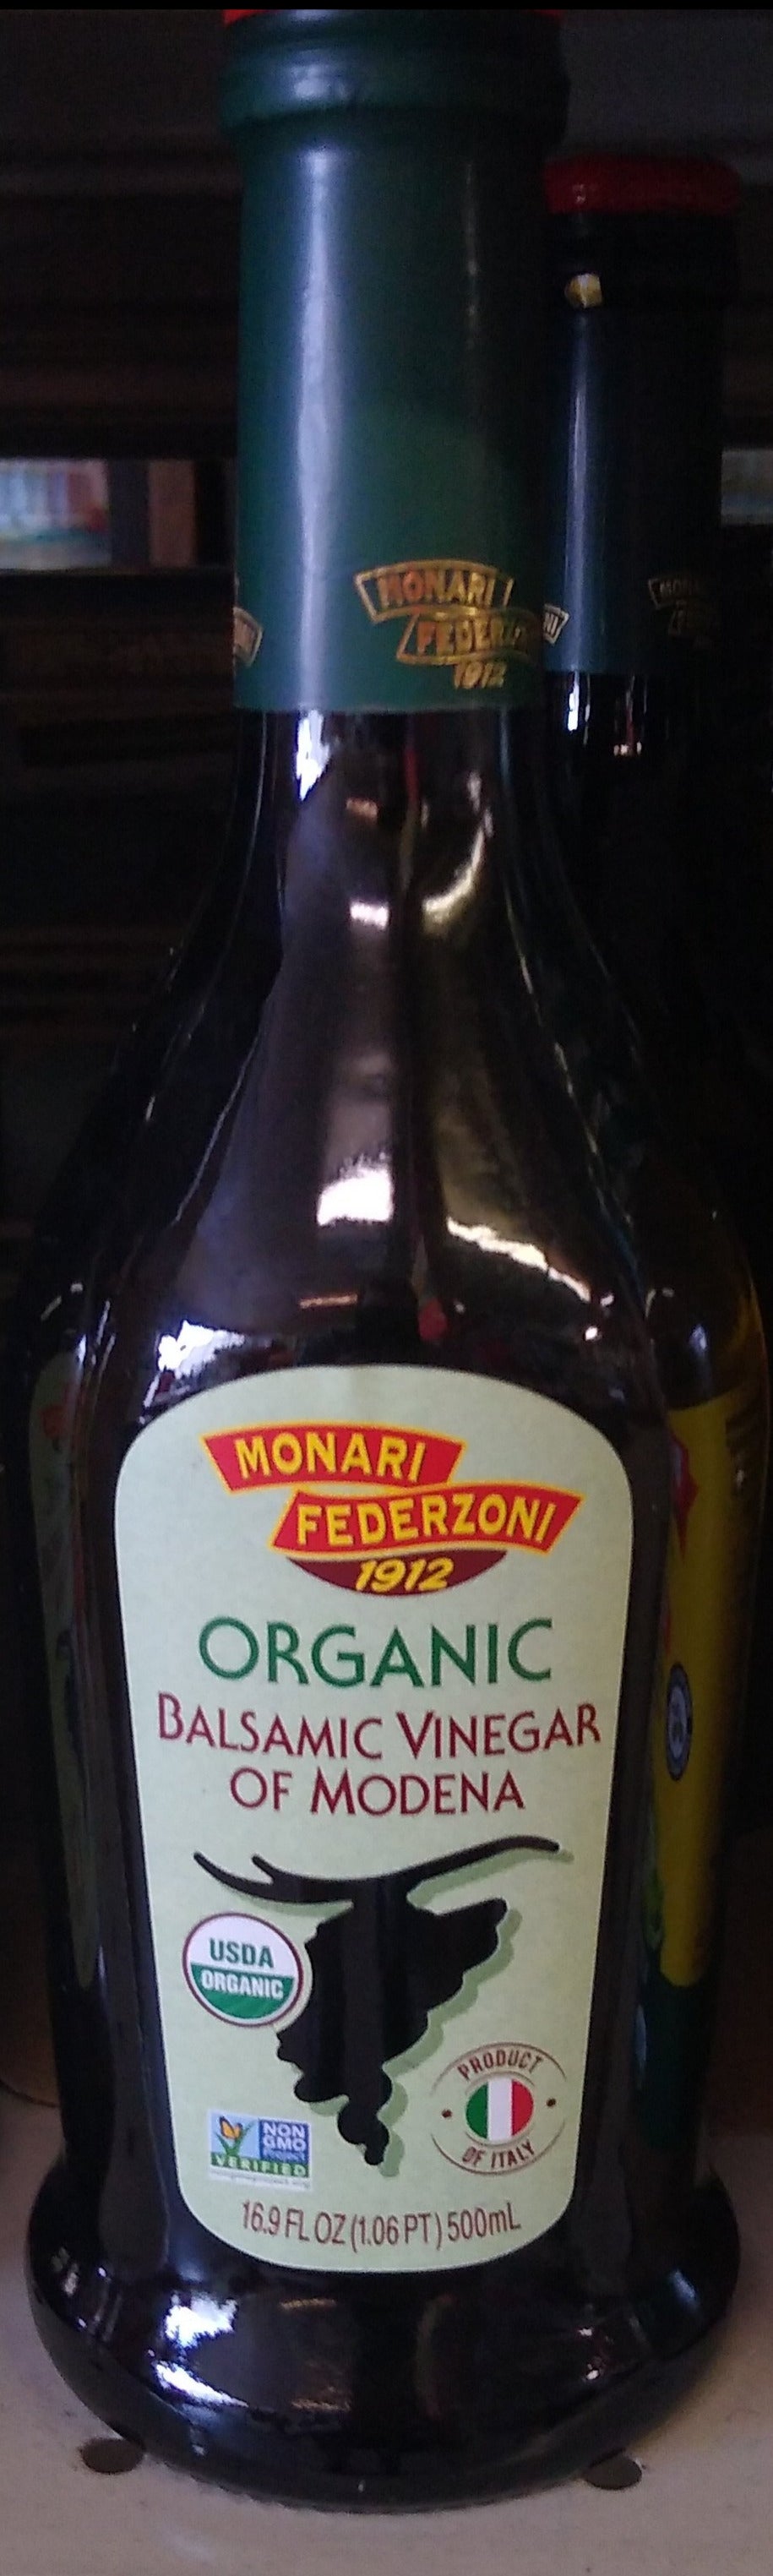 Vinegar, Balsamic, Field Day, Organic